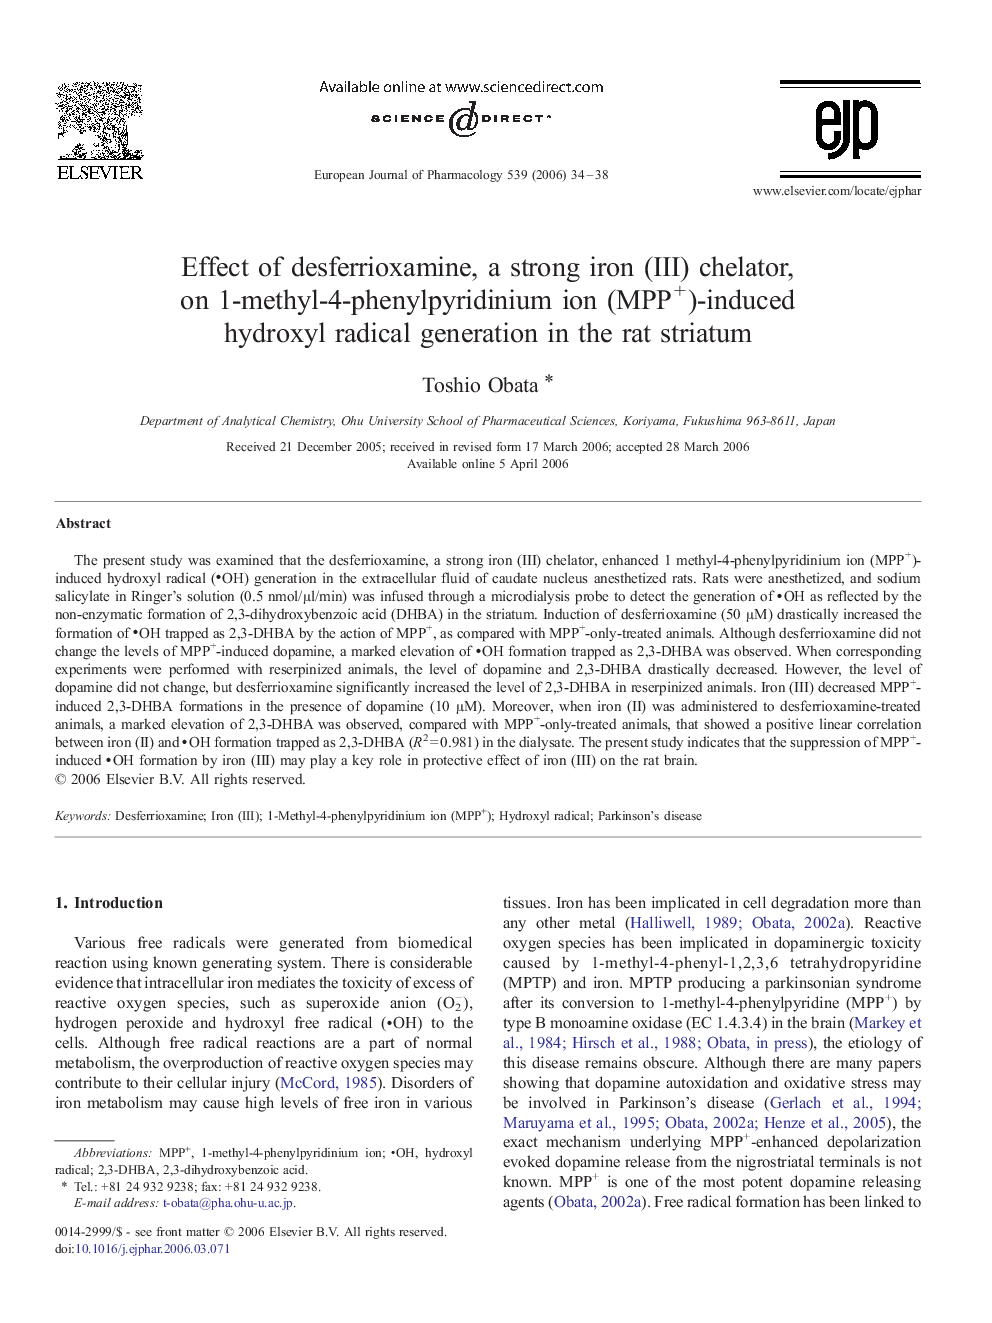 Effect of desferrioxamine, a strong iron (III) chelator, on 1-methyl-4-phenylpyridinium ion (MPP+)-induced hydroxyl radical generation in the rat striatum